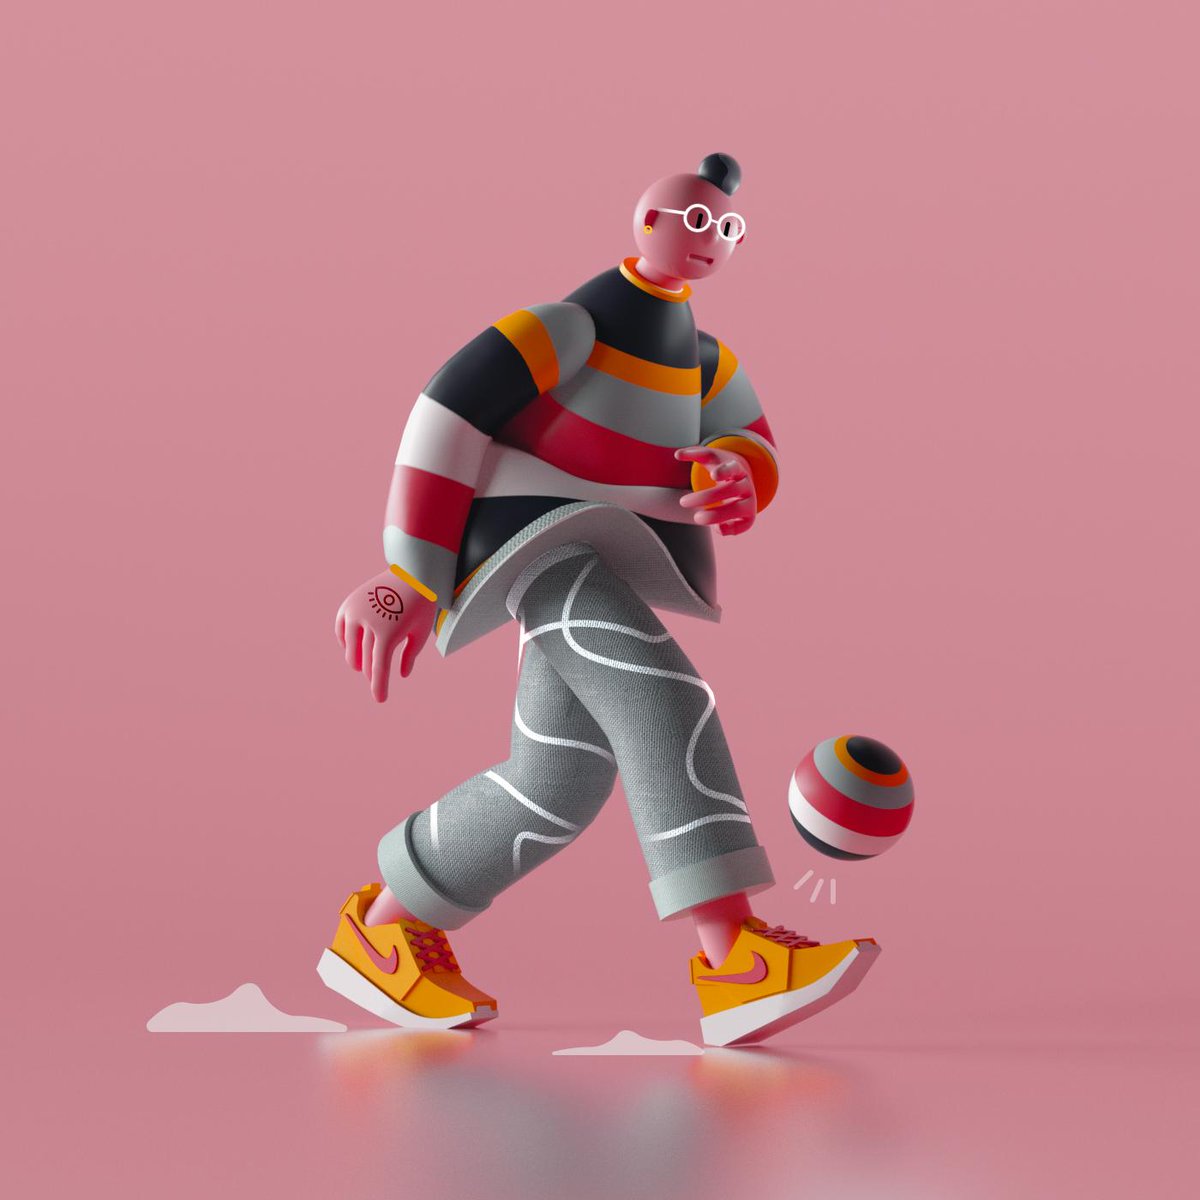 Limpiamente Zapatos puramente Mattey on Twitter: "Nikeeeeeeeeeeeeeee character. #design #3d #character @ Nike https://t.co/bpVSKIiH5W" / Twitter